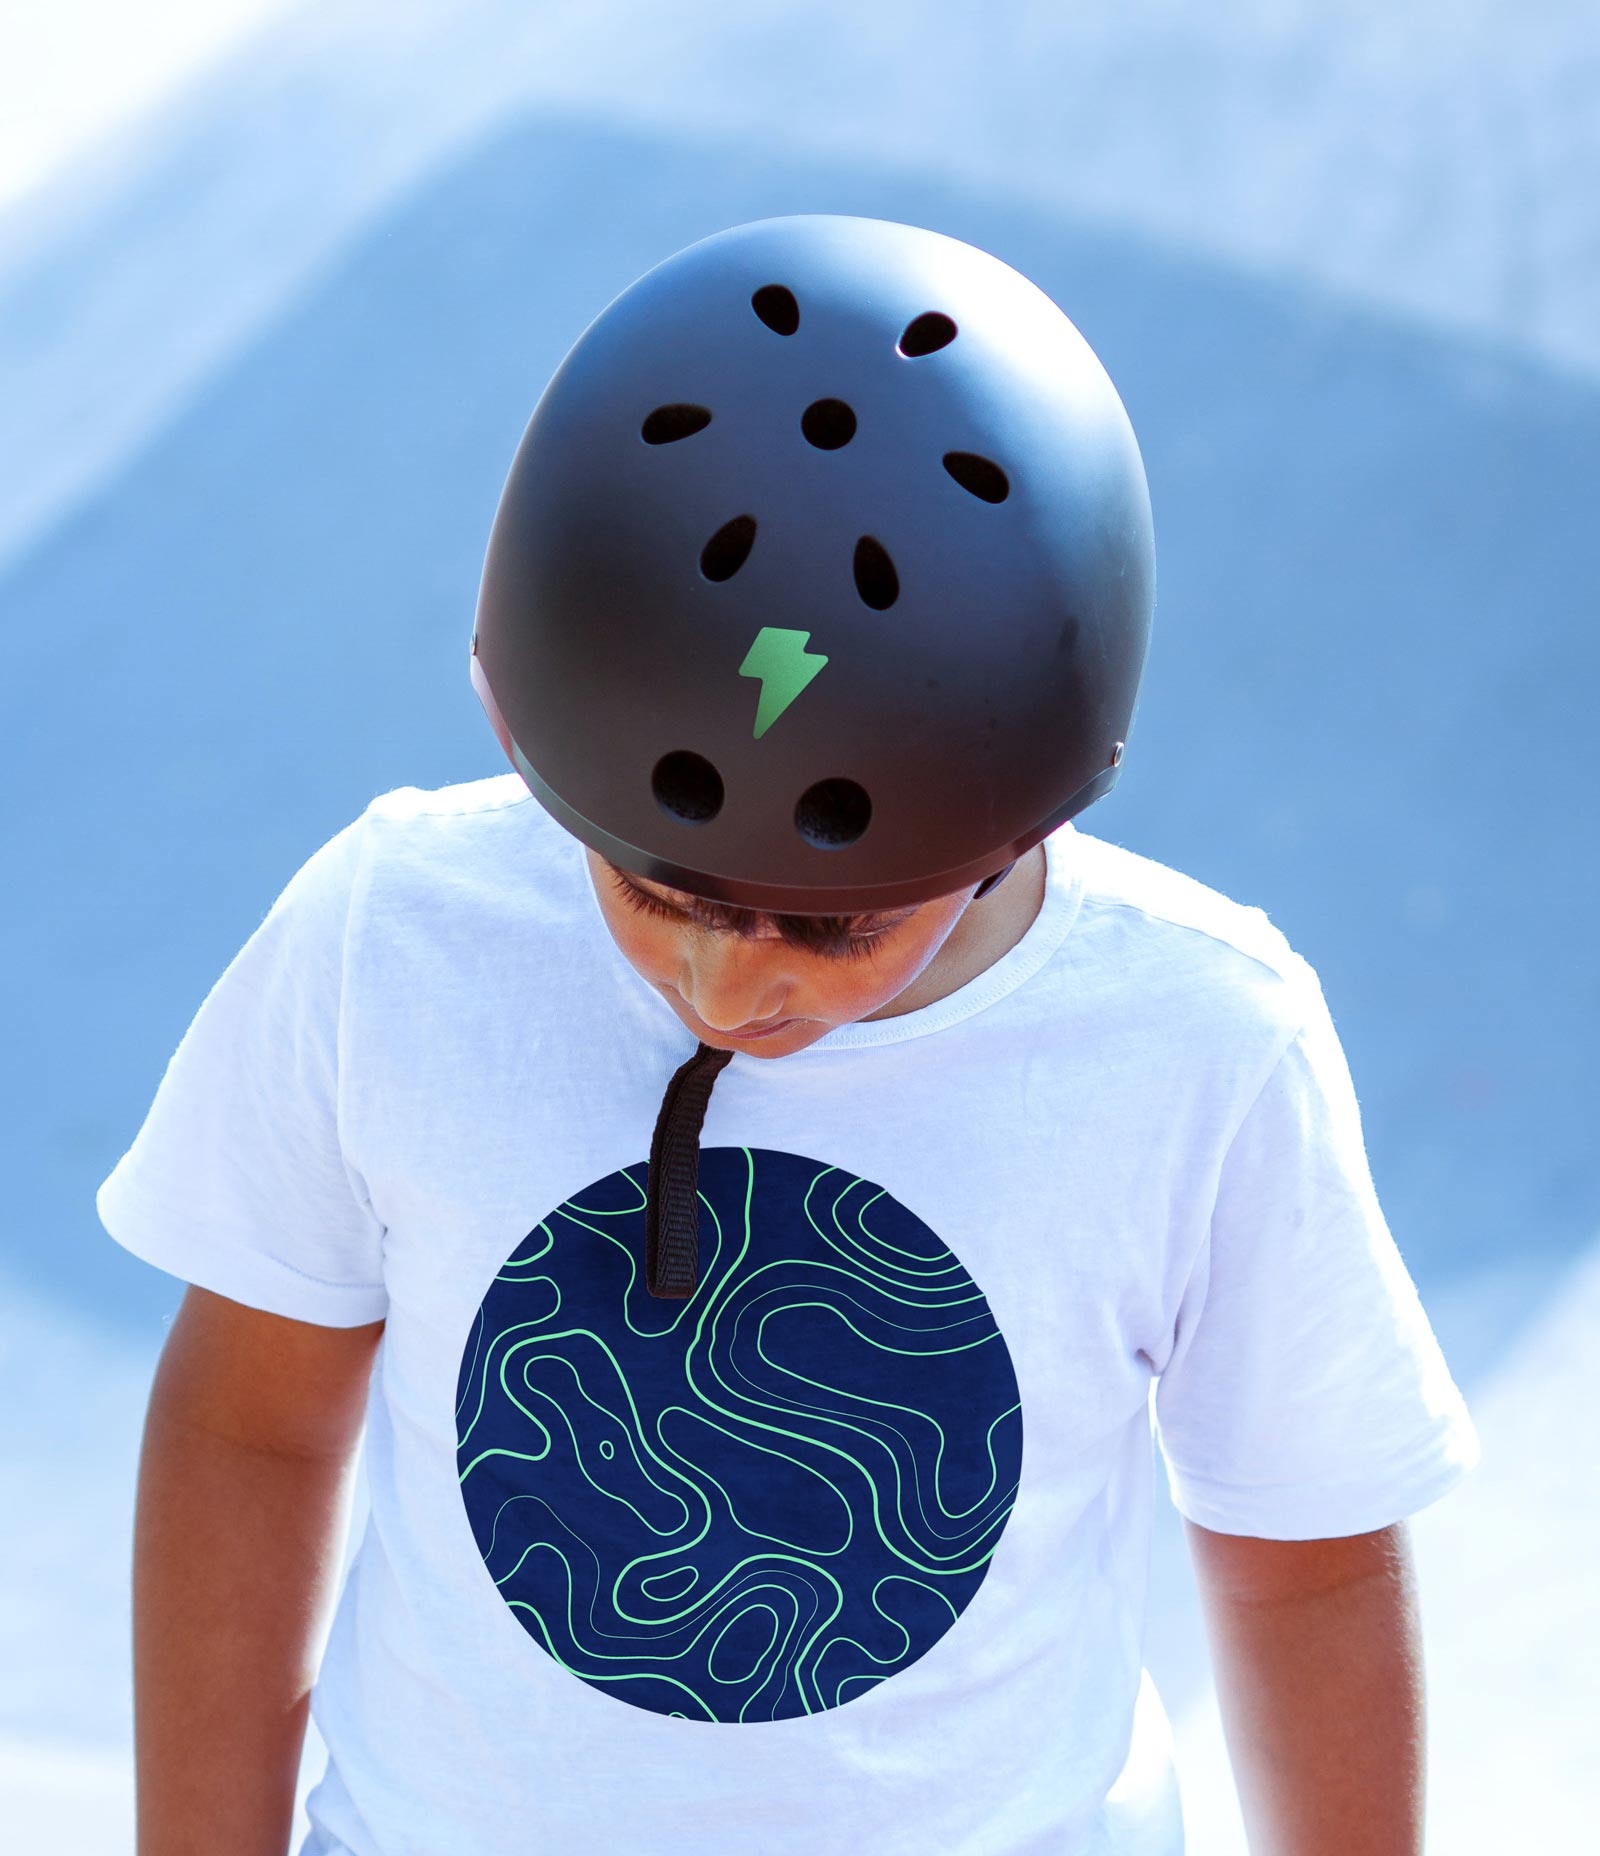 Green flash logo on helmet and pattern on tshirt